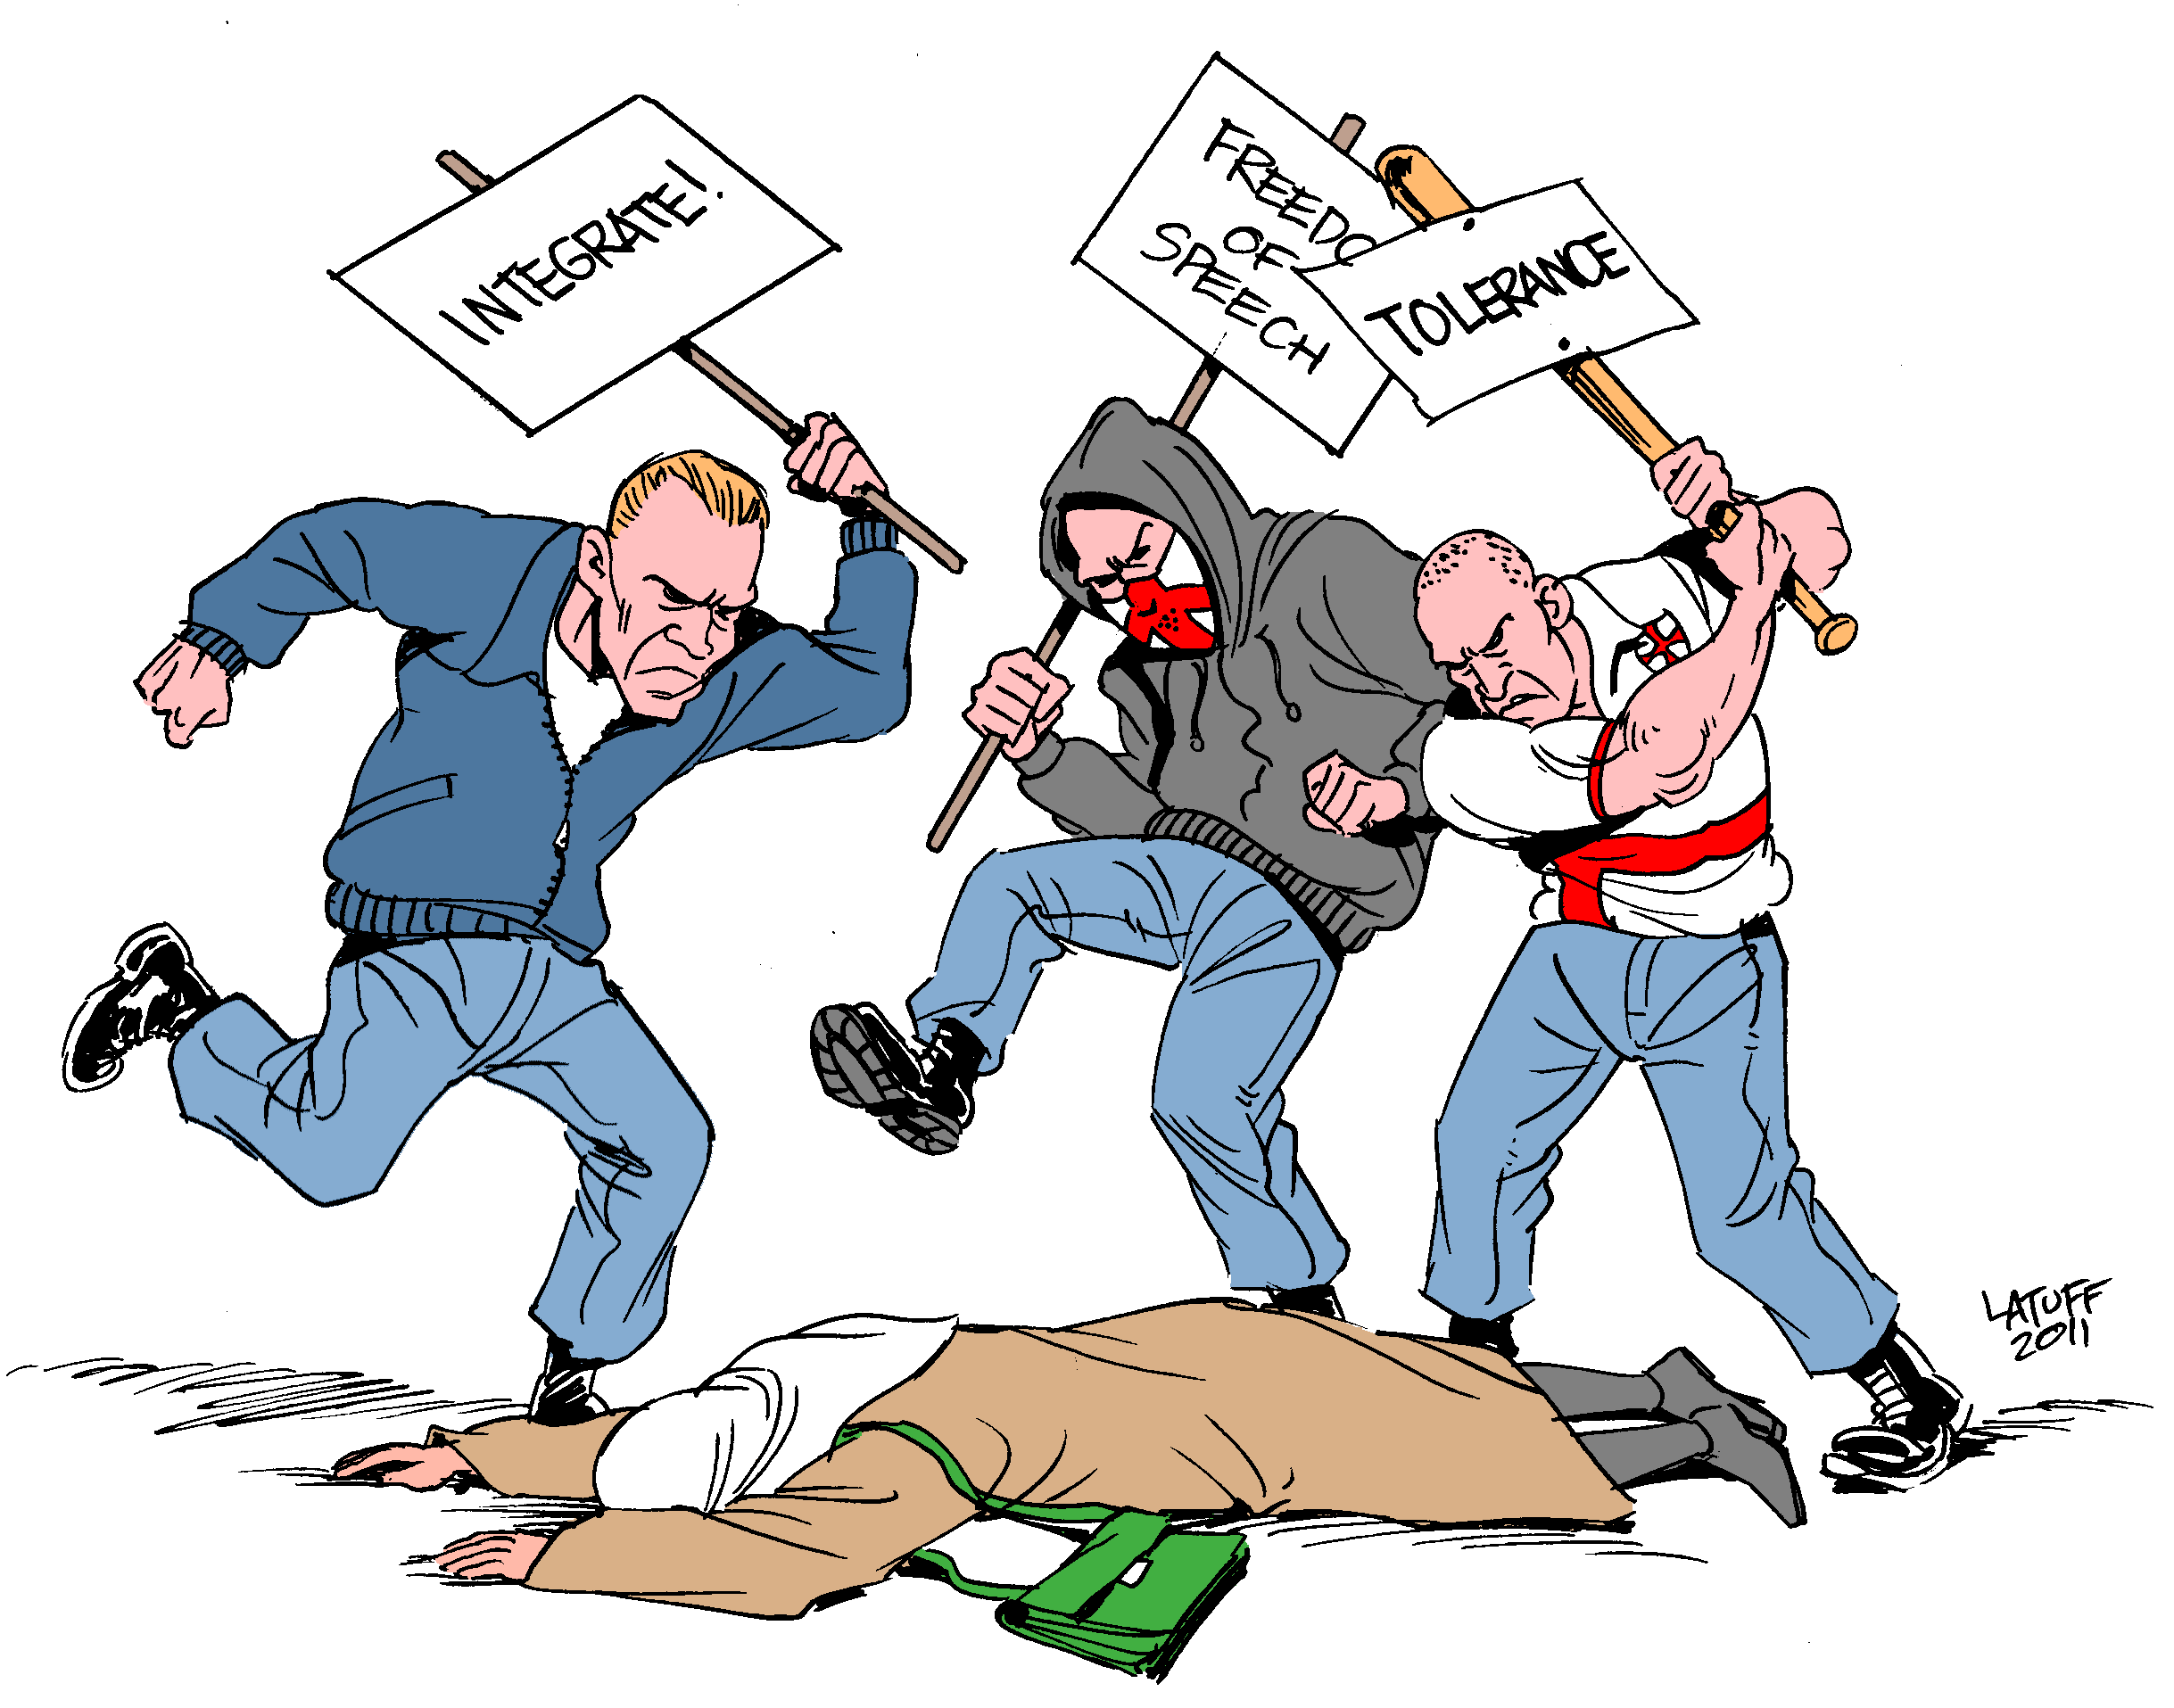 Исламофобия это. Религиозный конфликт карикатуры. Карикатура против Ислама. Дискриминация карикатура. Преступность карикатура.